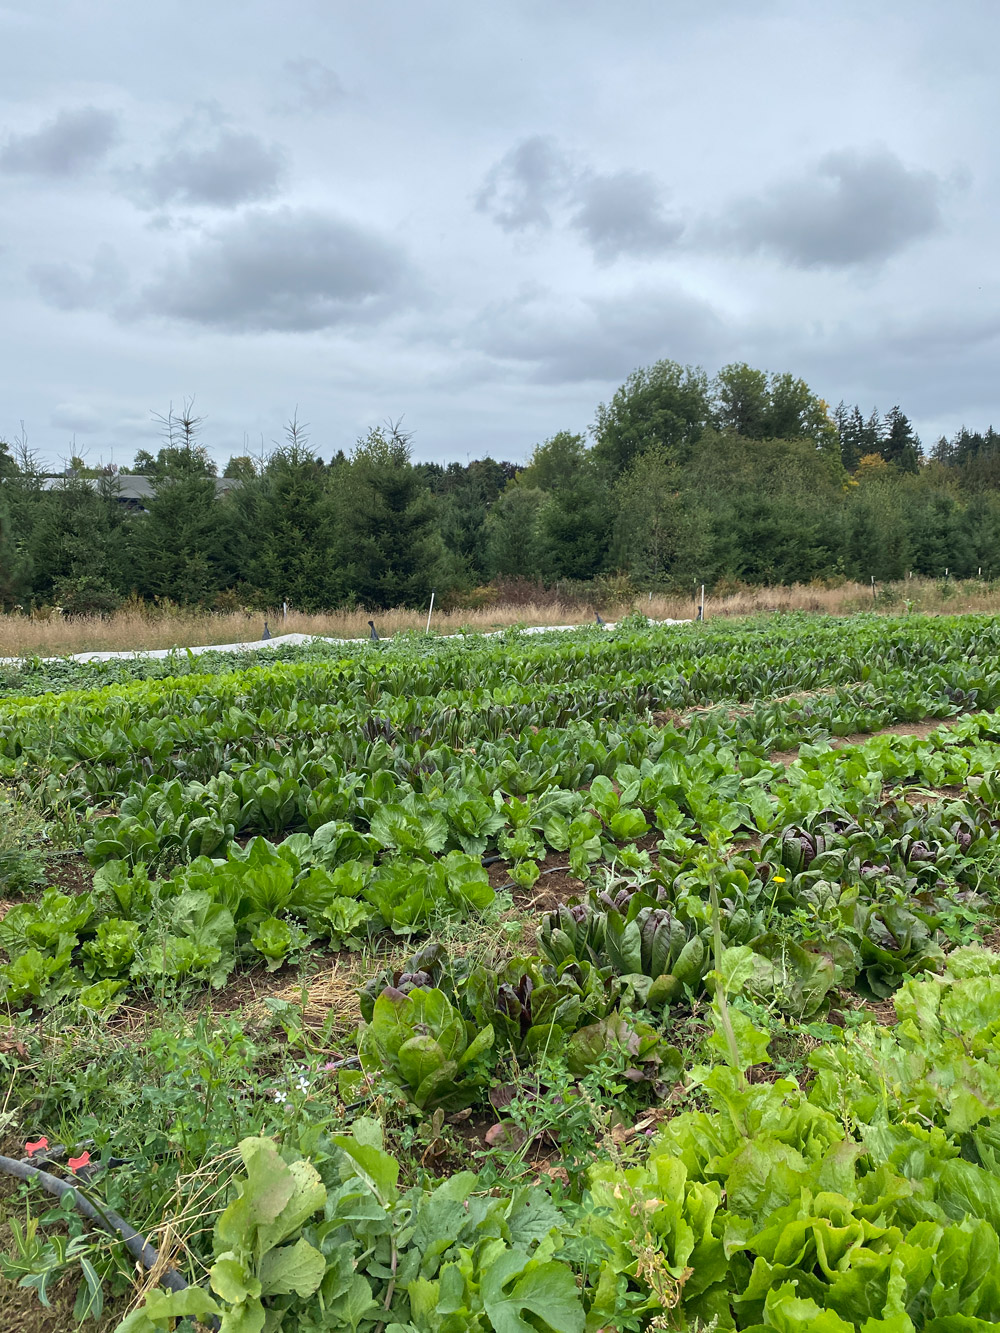 Growing Gardens Farm Tour, Gresham, Oregon